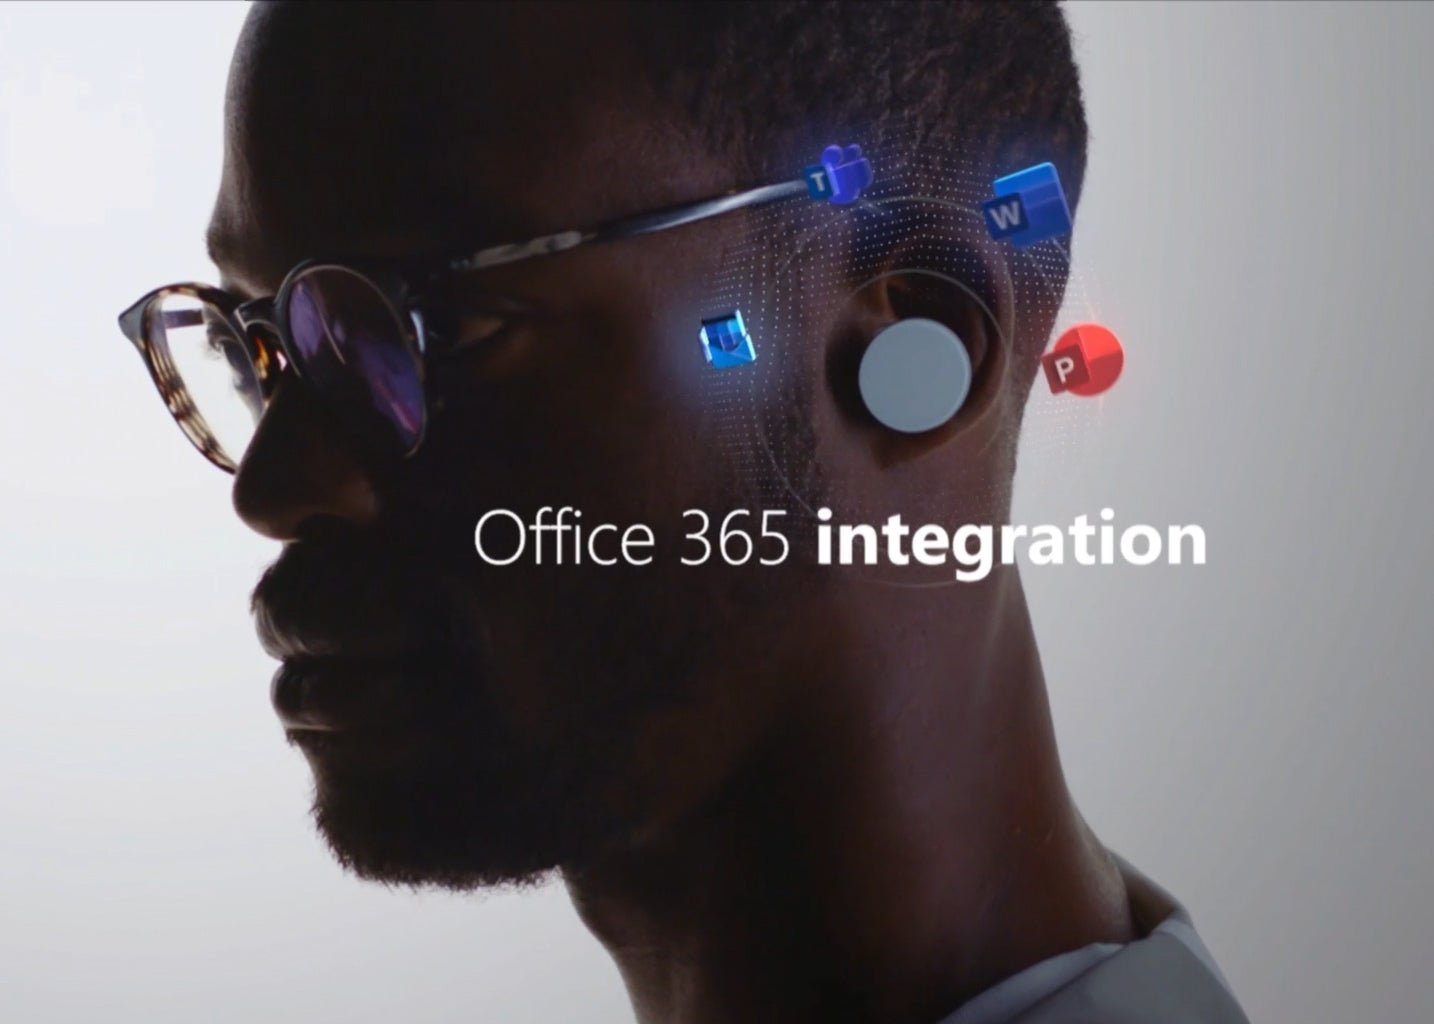 Microsoft earbuds office integración